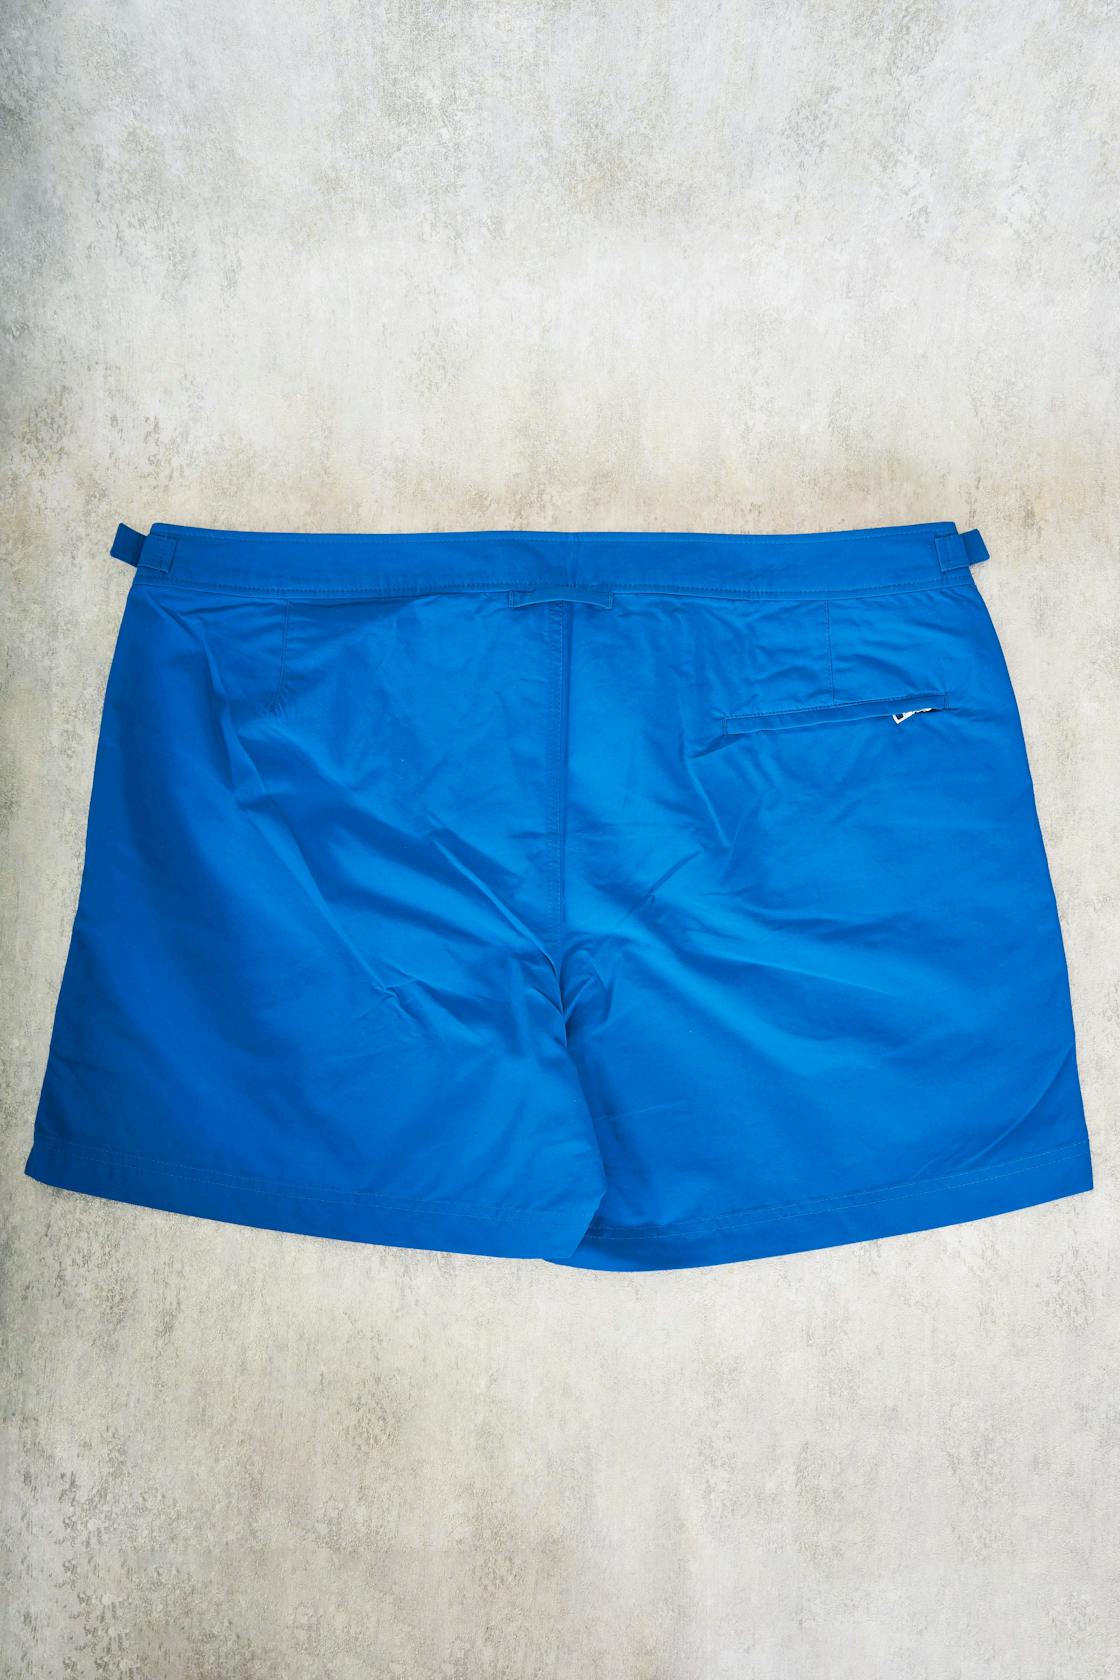 Orlebar Brown Bay Blue Setter Swim Shorts